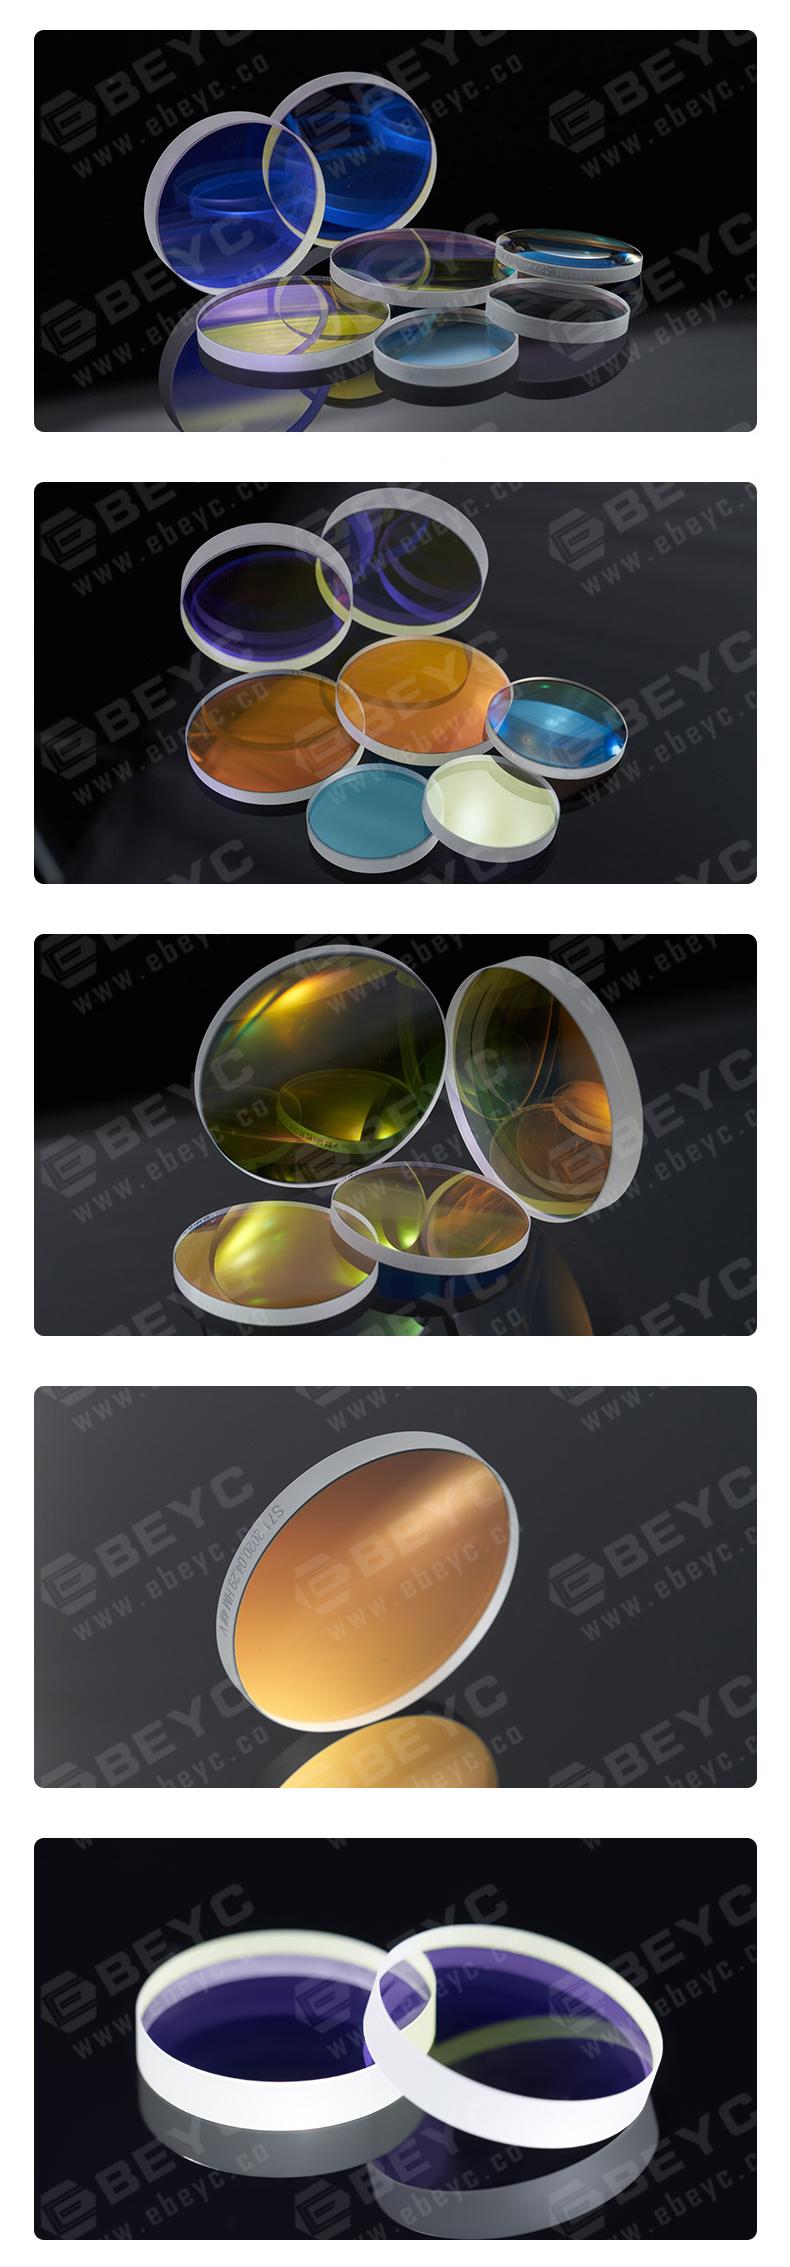 raytools protection lens